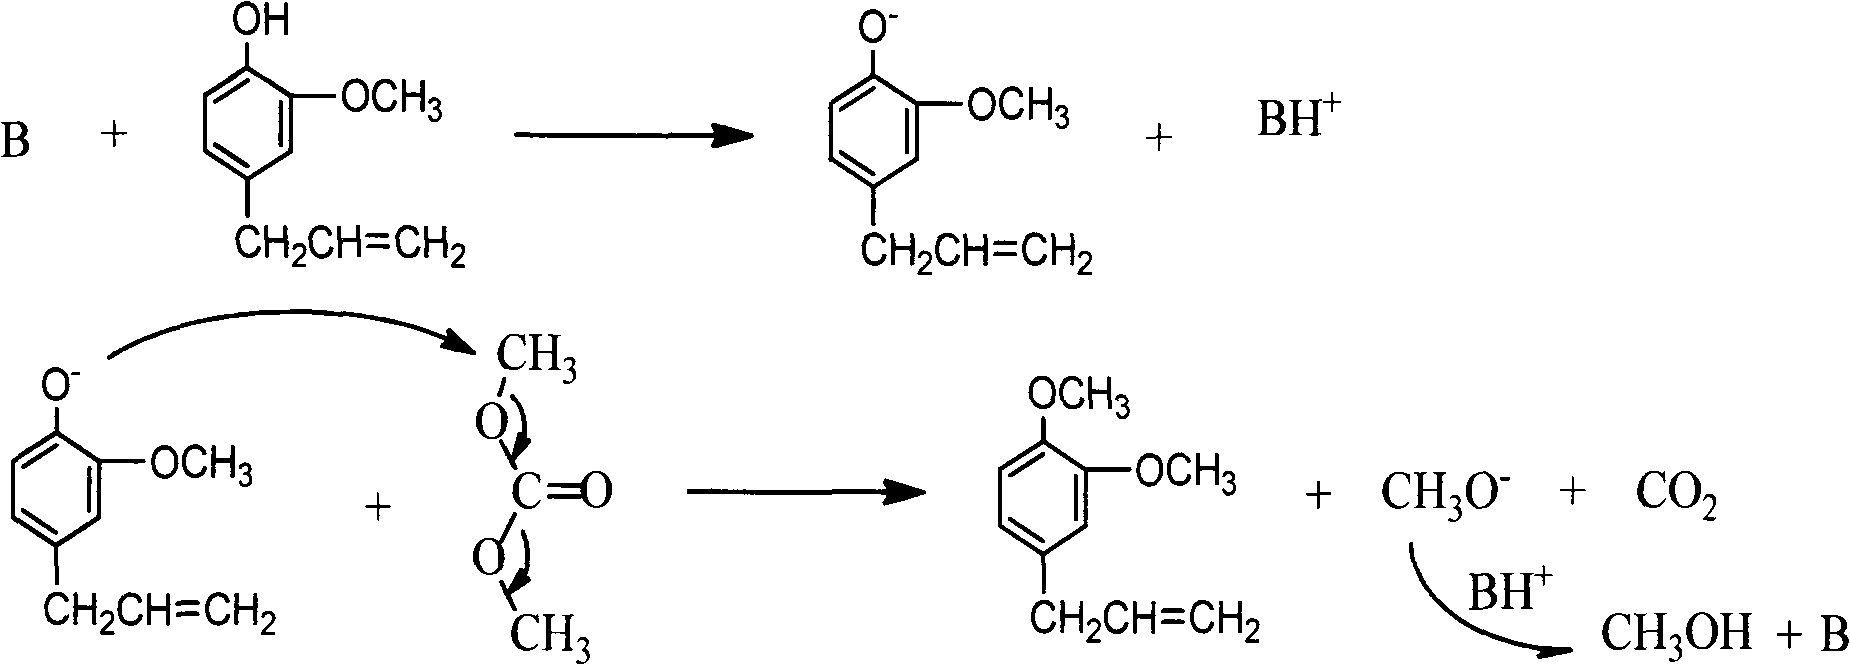 Synthesis method of eugenol methyl ether